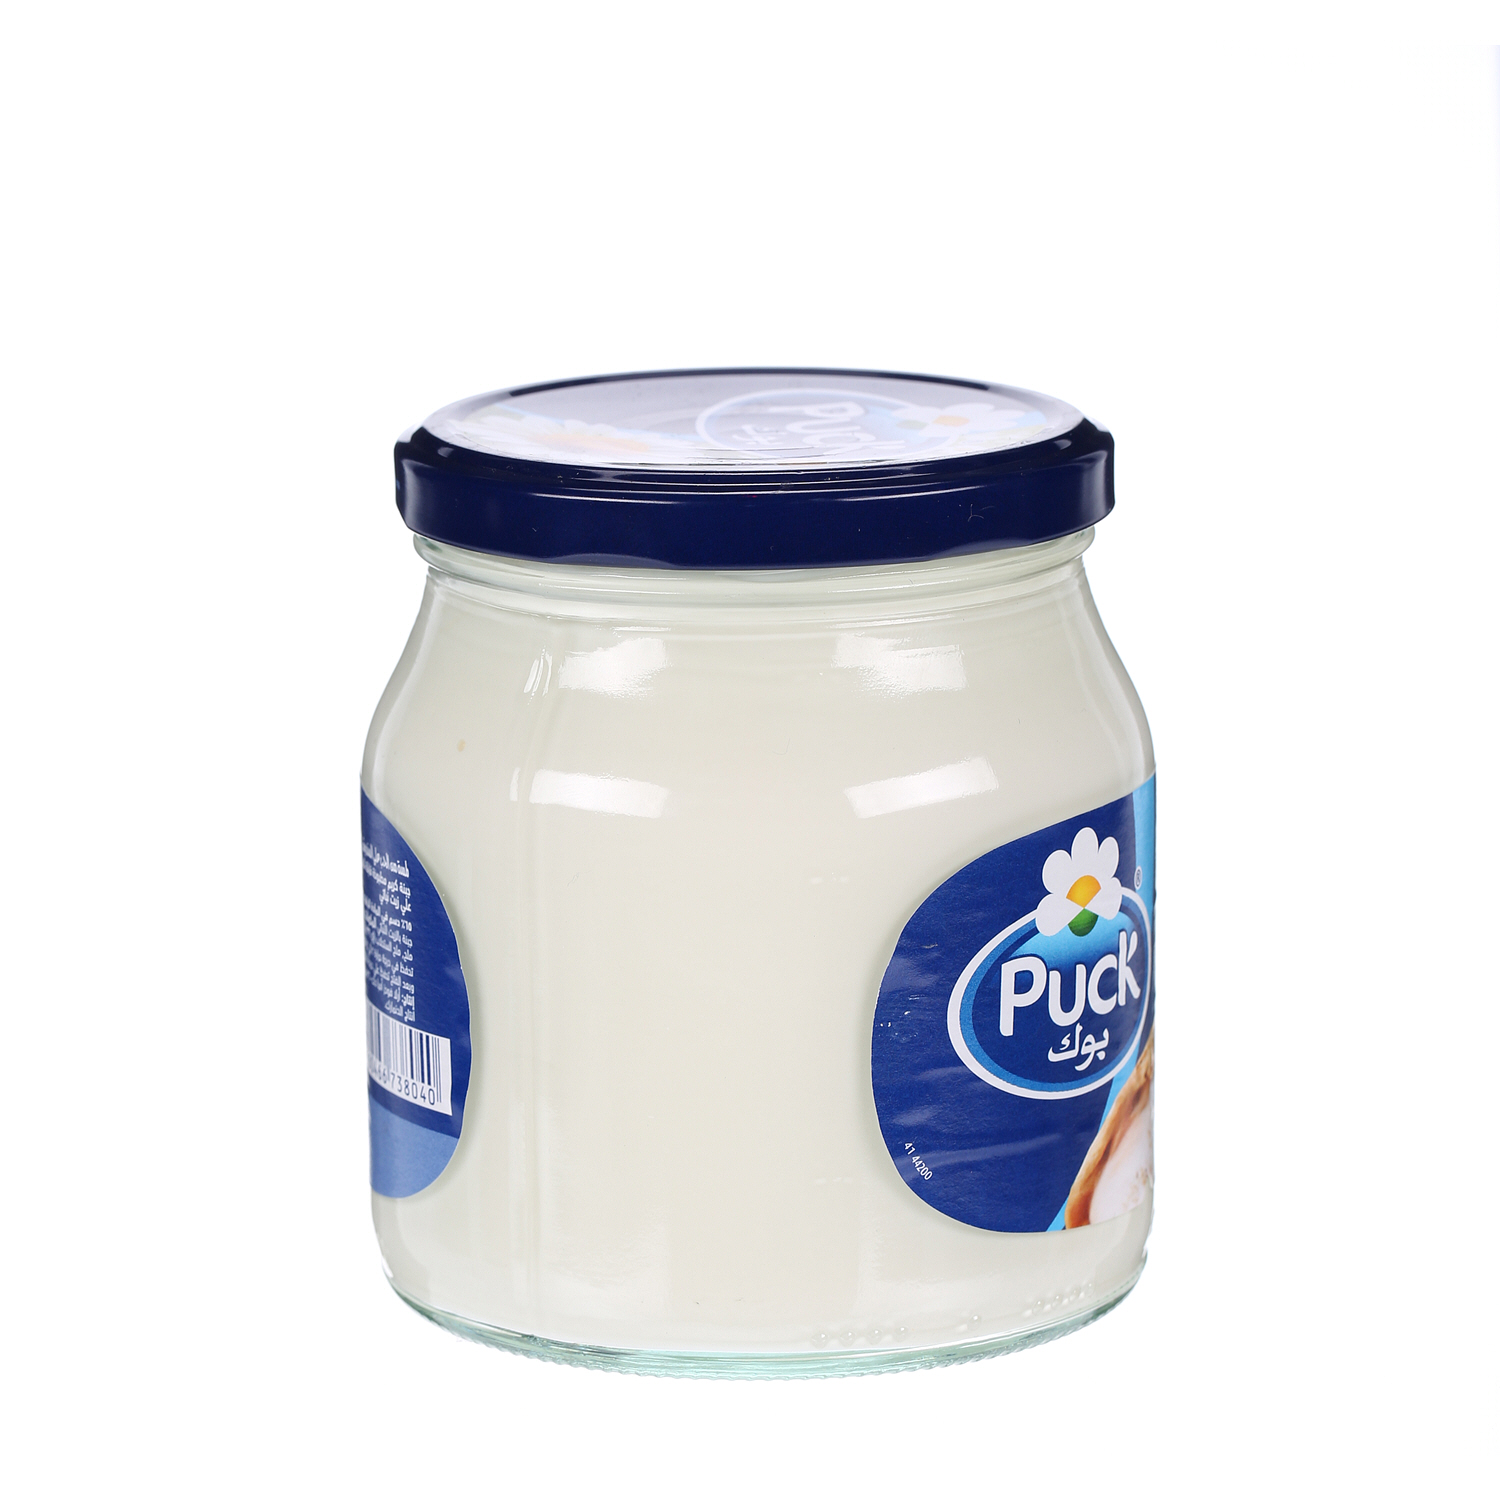 Puck Cheese Cream Jar 500 g